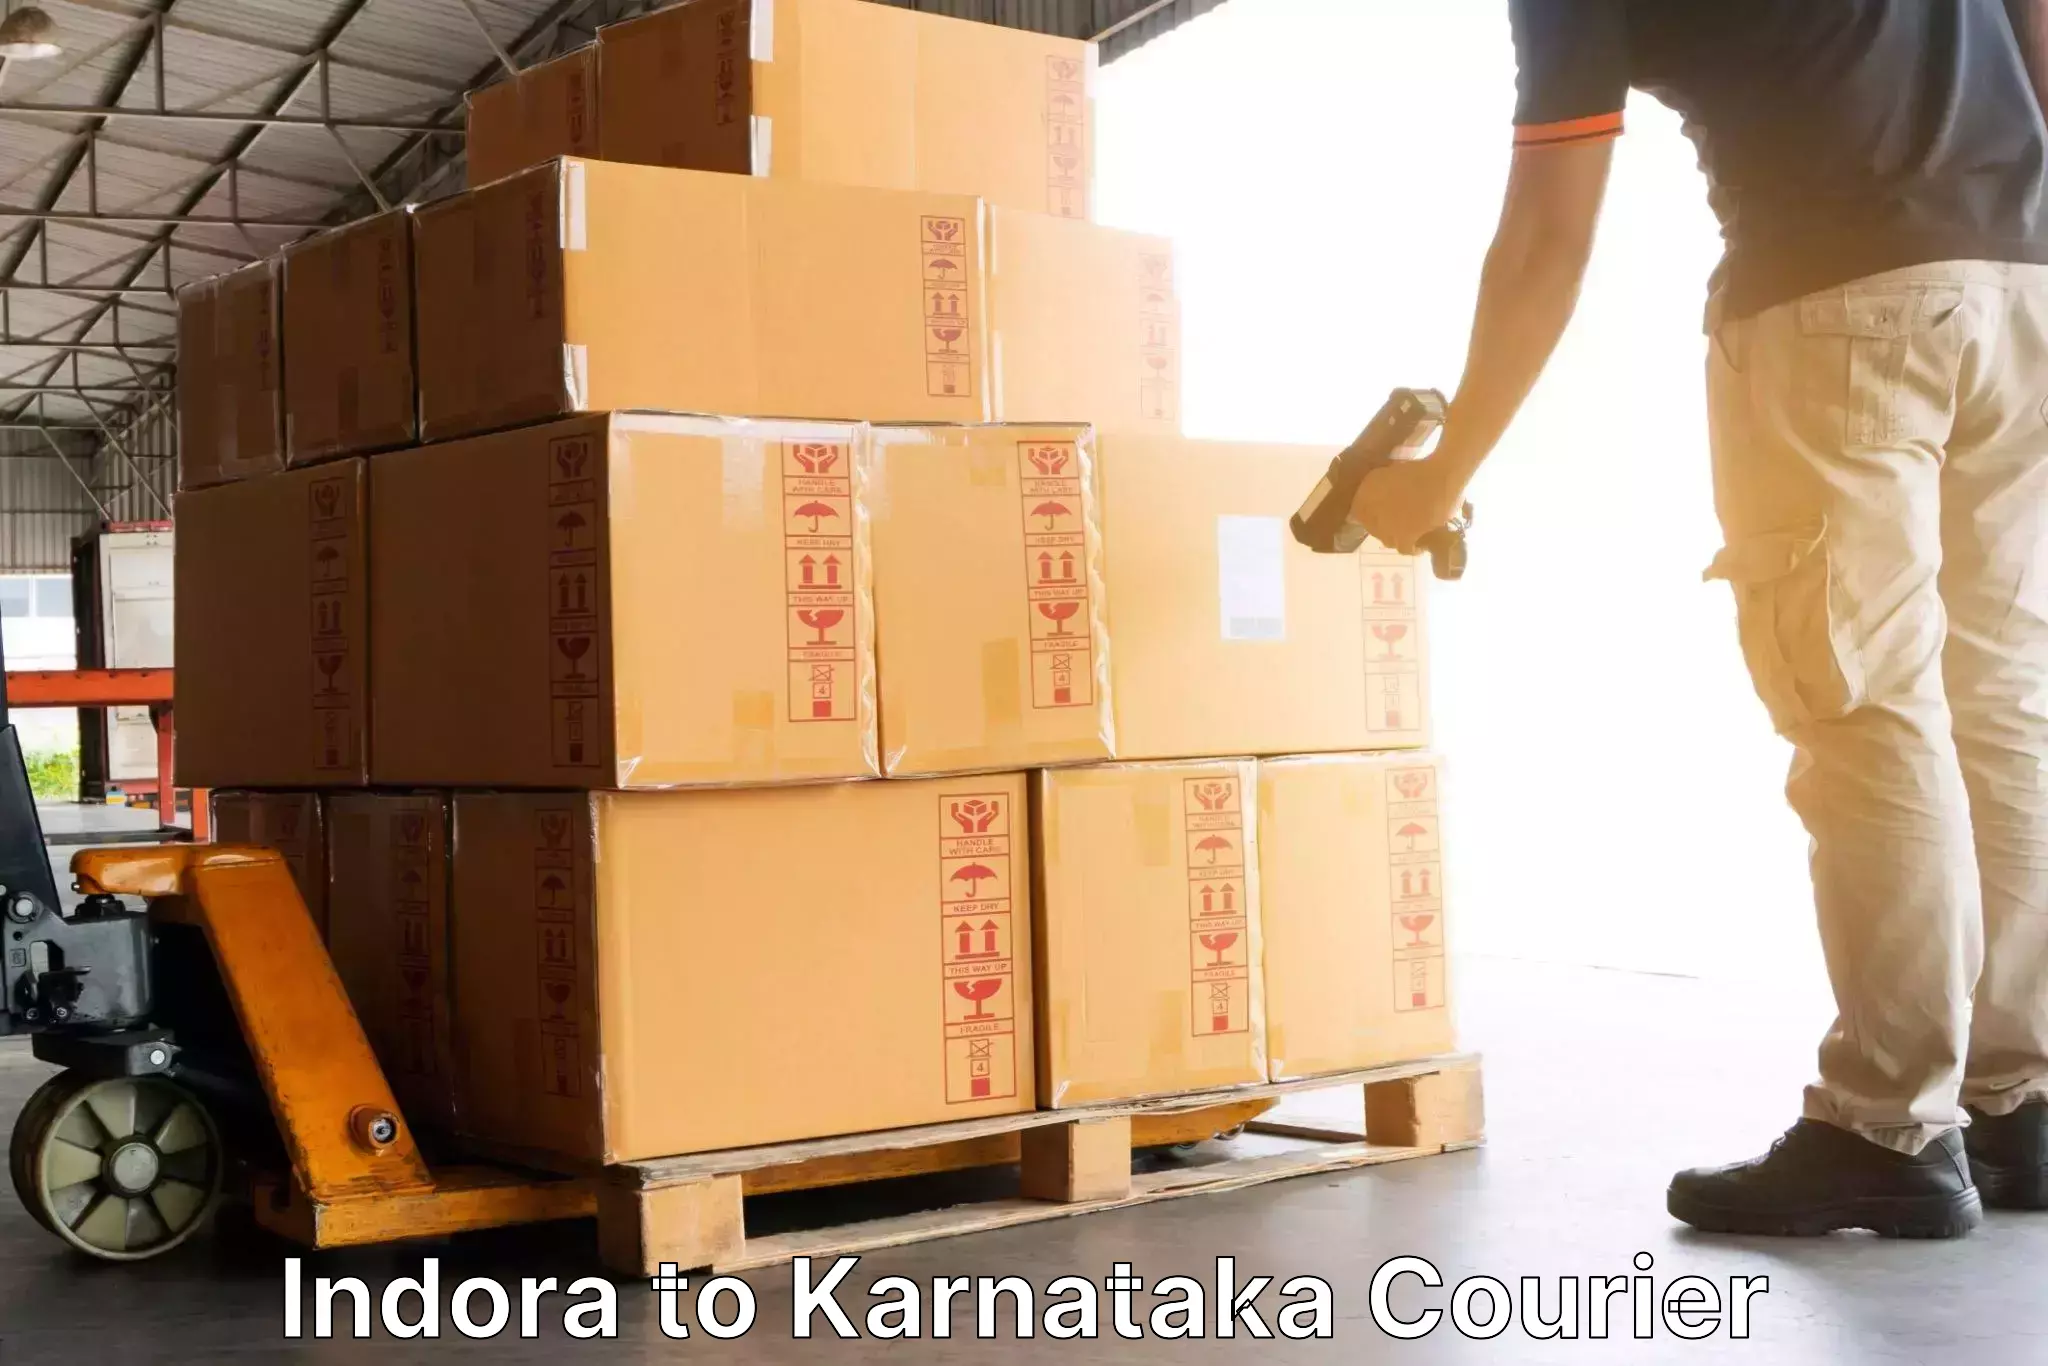 Nationwide courier service Indora to Karnataka